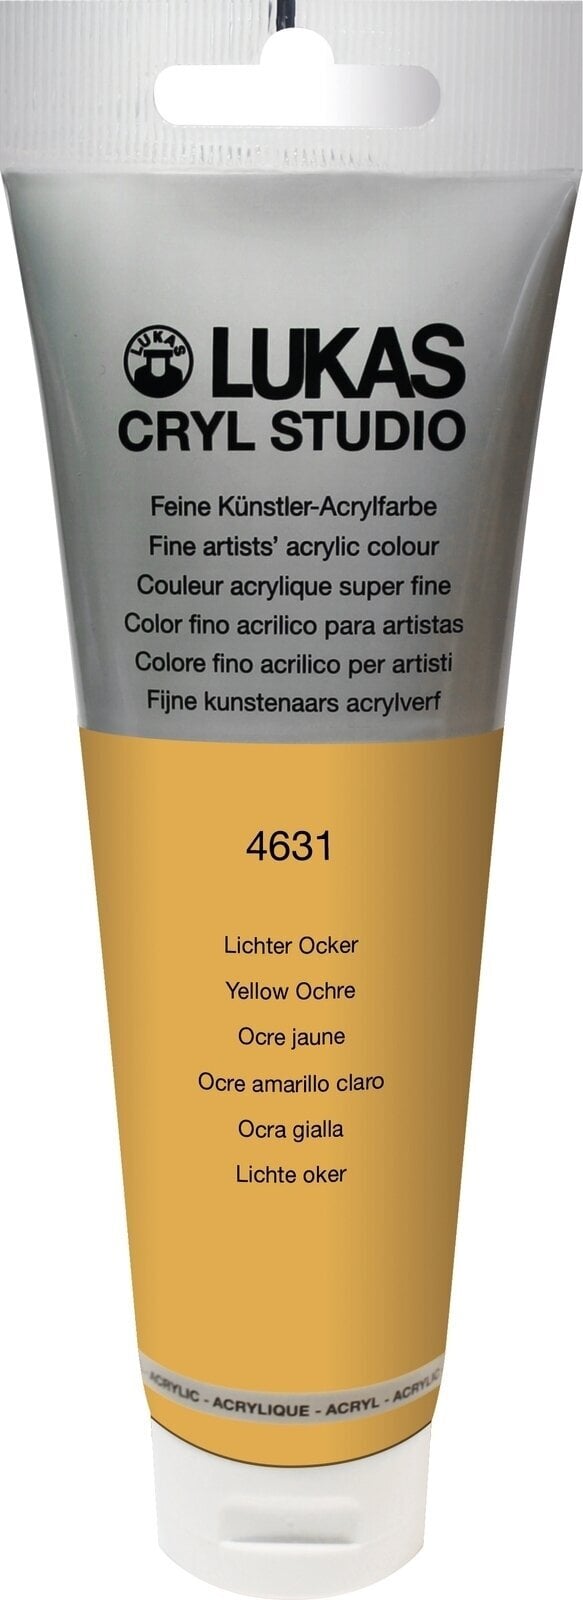 Akrylová barva Lukas Cryl Studio Acrylic Paint Plastic Tube Akrylová barva Yellow Ochre 125 ml 1 ks